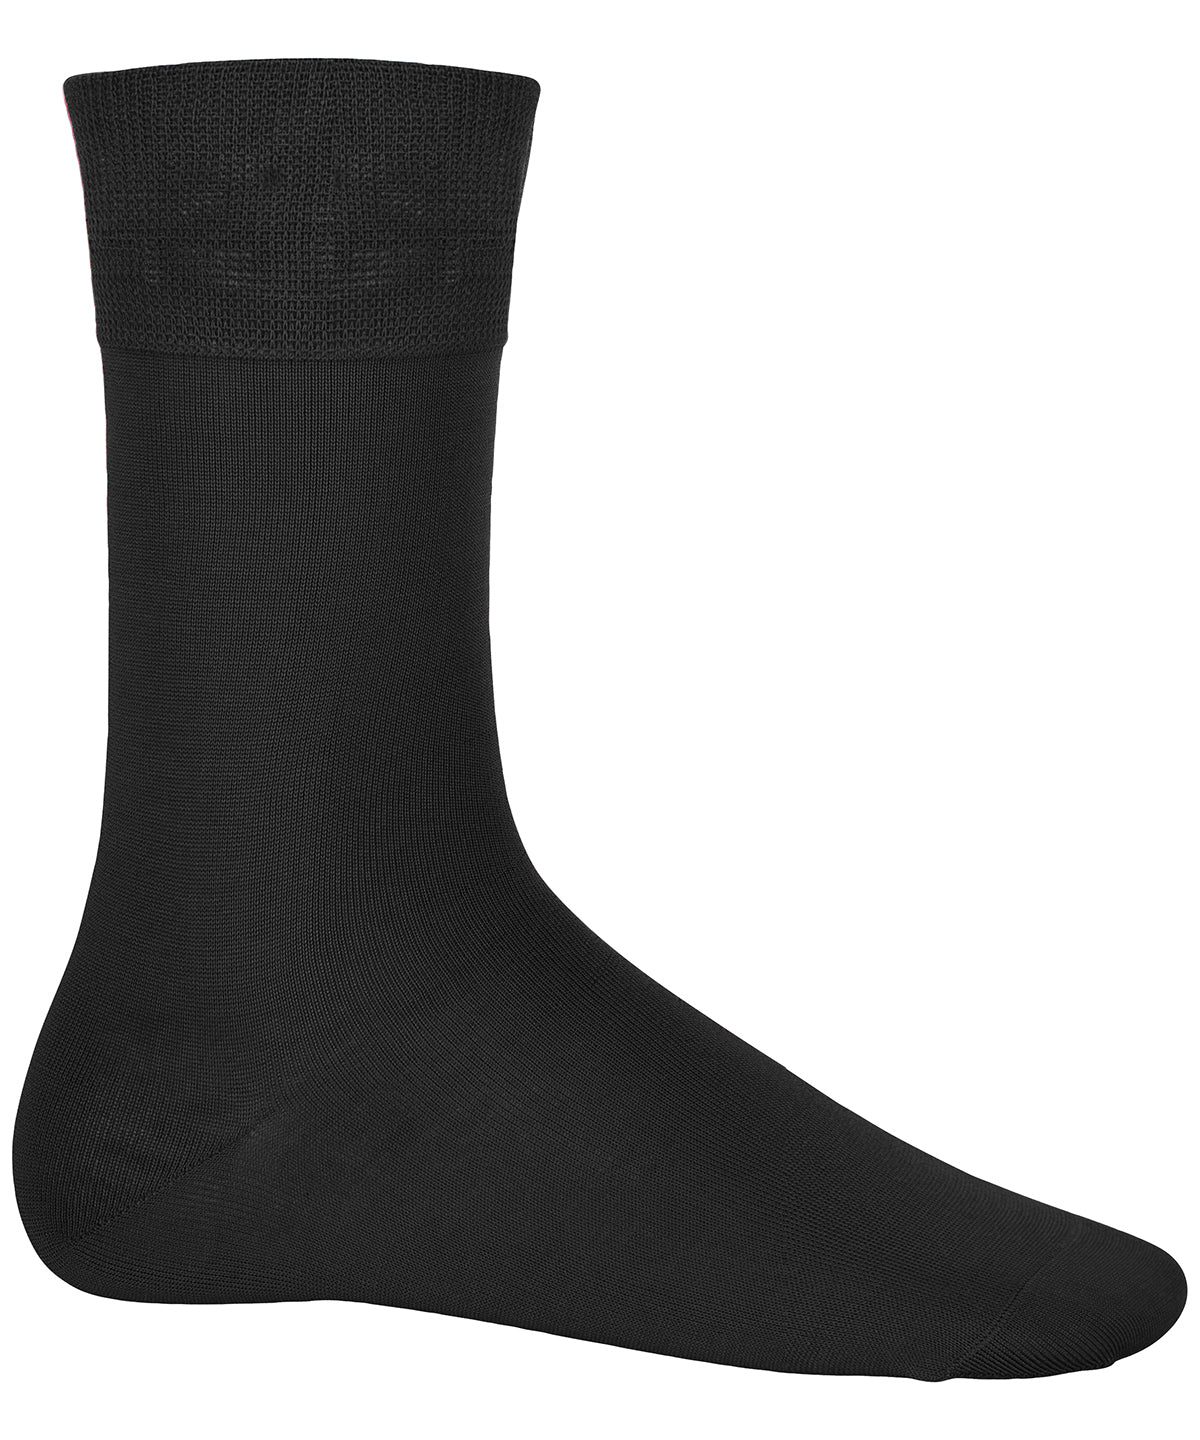 Sokkar - Cotton City Socks